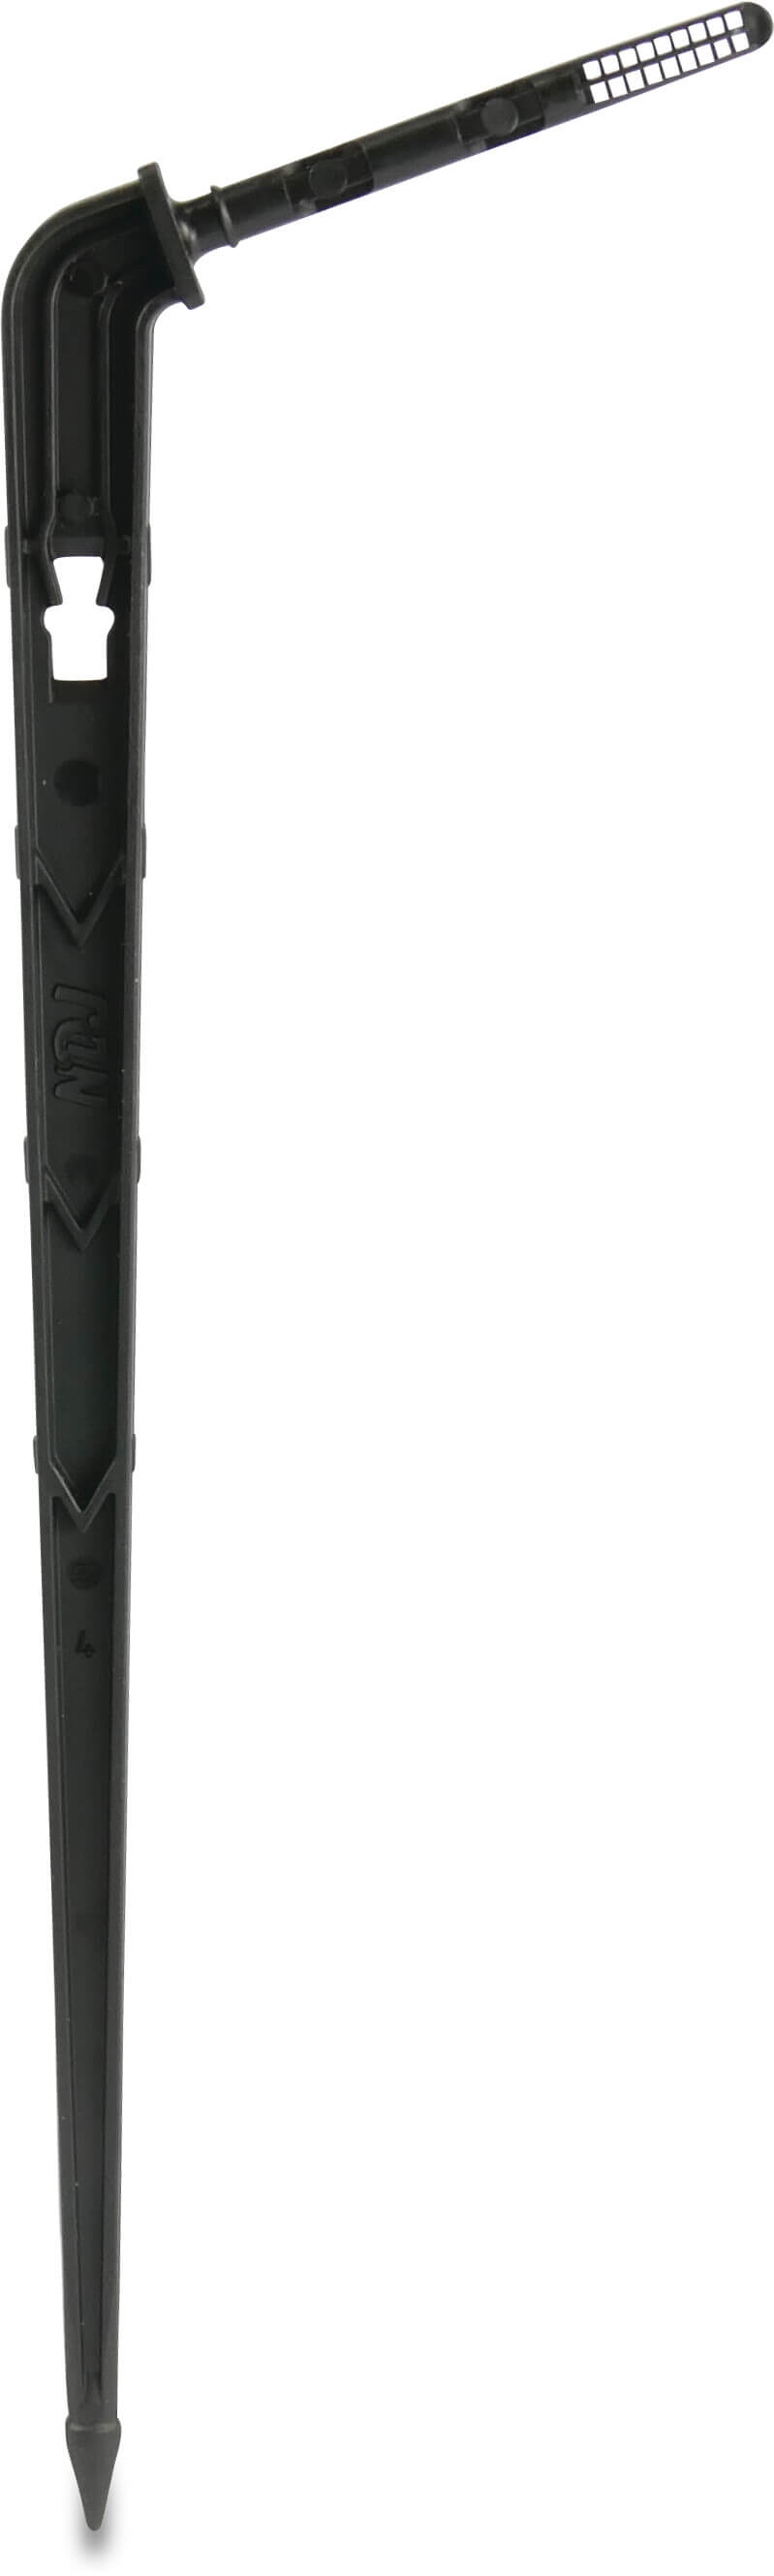 Drip stick  PE 5 mm 2ltr/h 15cm black with labyrinth